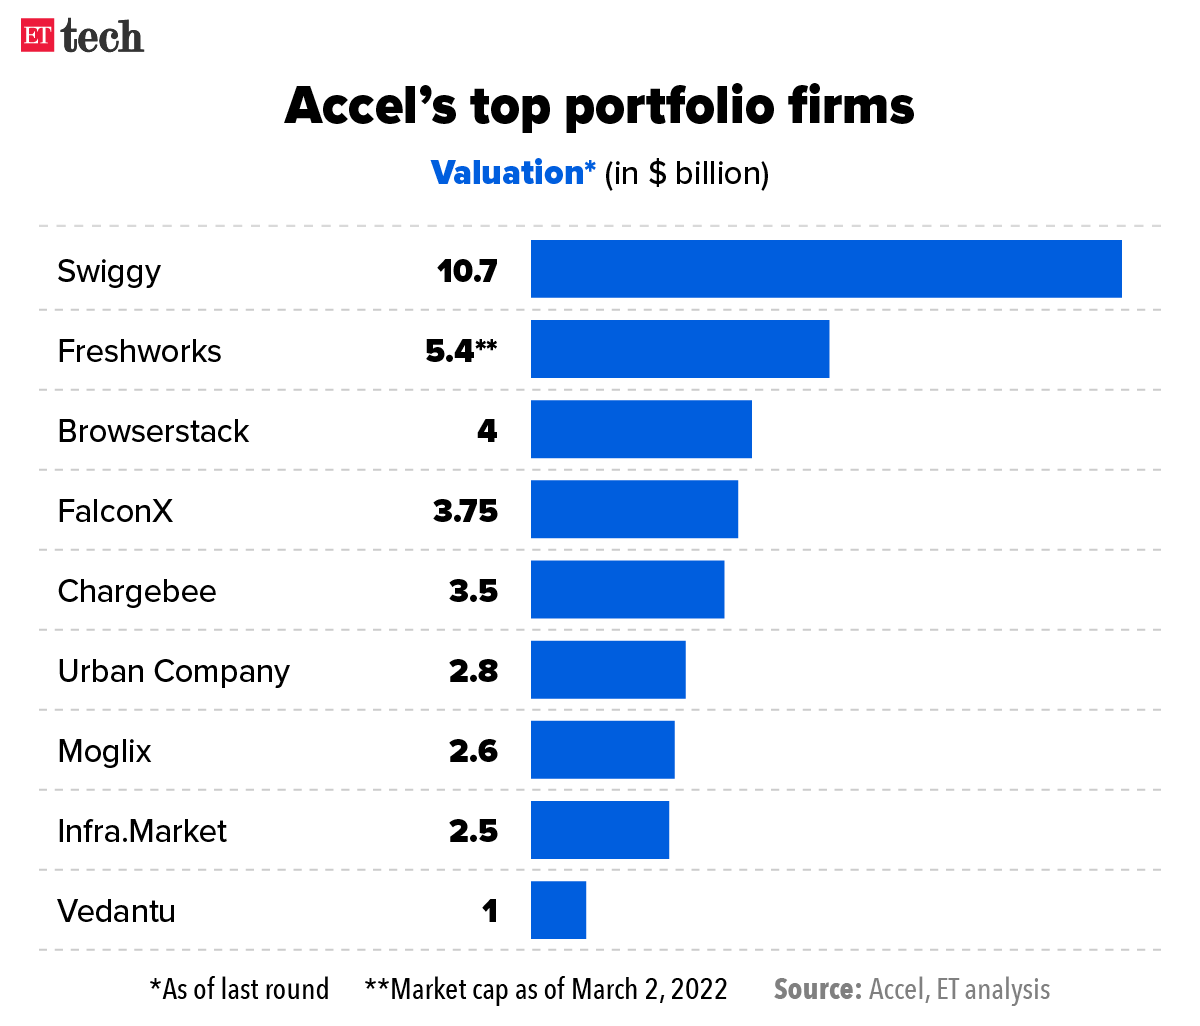 Accels top portfolio firm